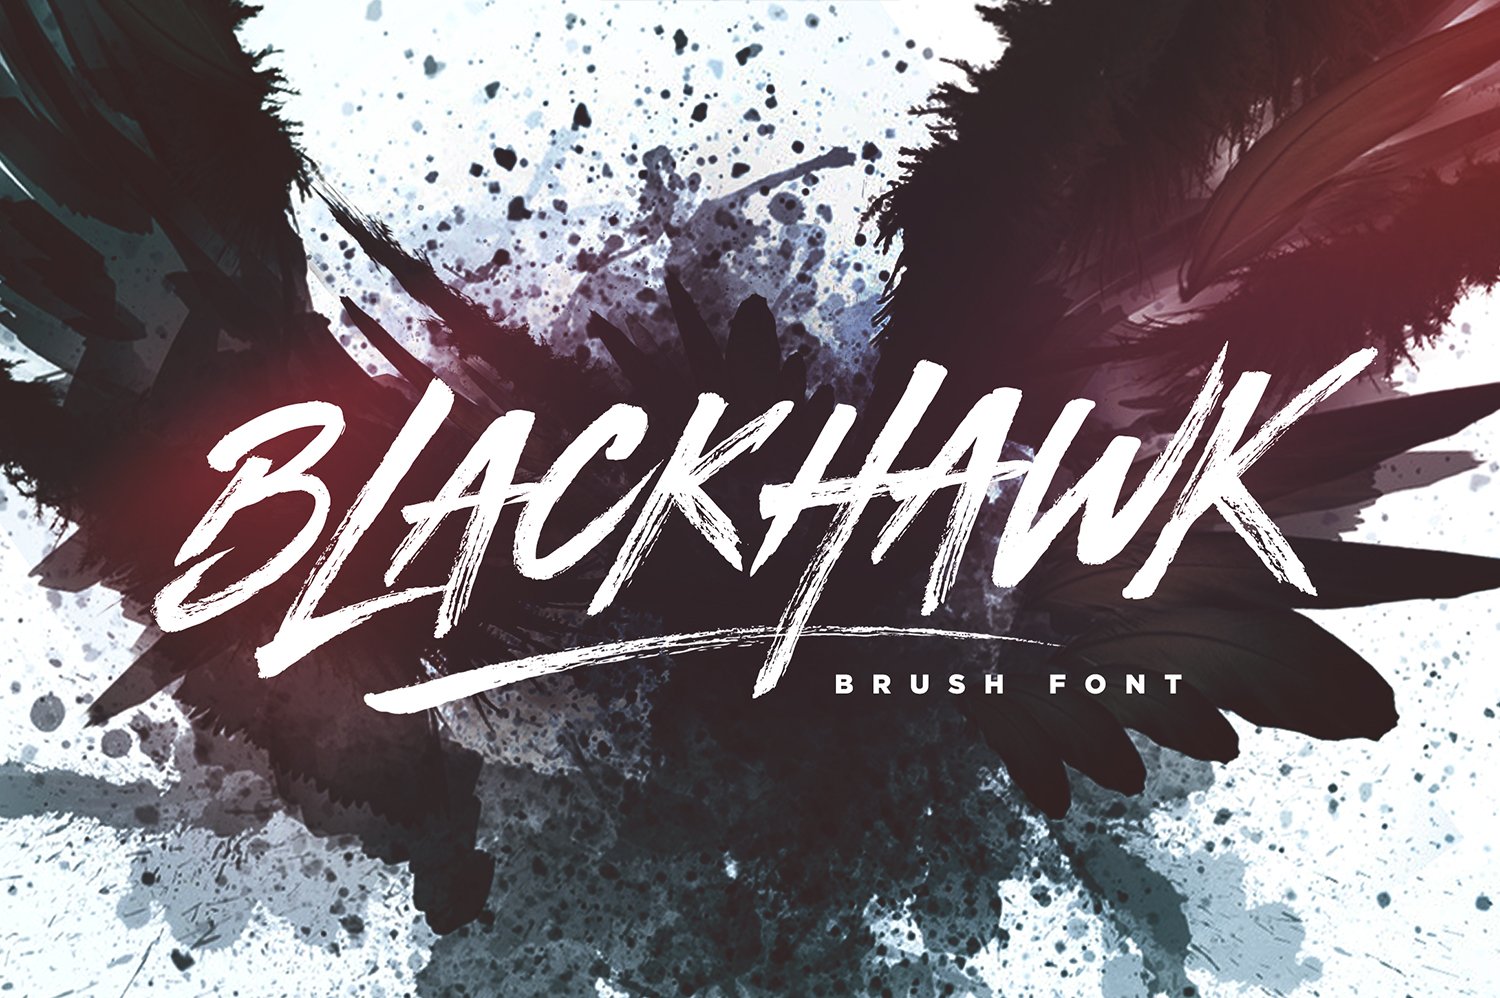 BLACKHAWK Brush Font cover image.